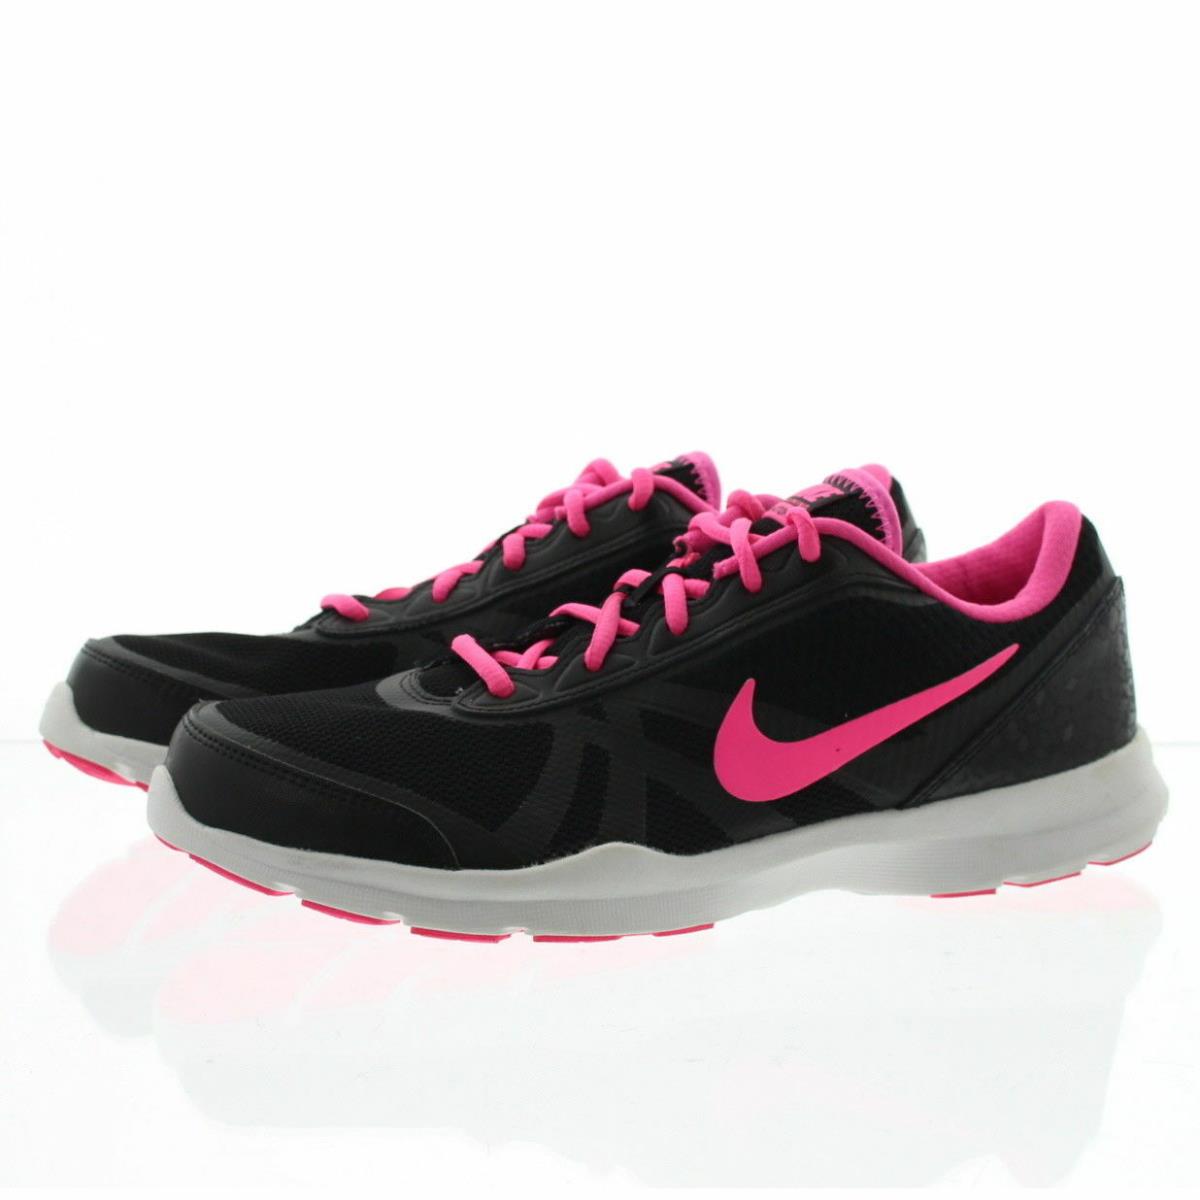 Nike 749180-004 Womens Core Motion TR 2 Mesh Cross Training Shoe Sneaker